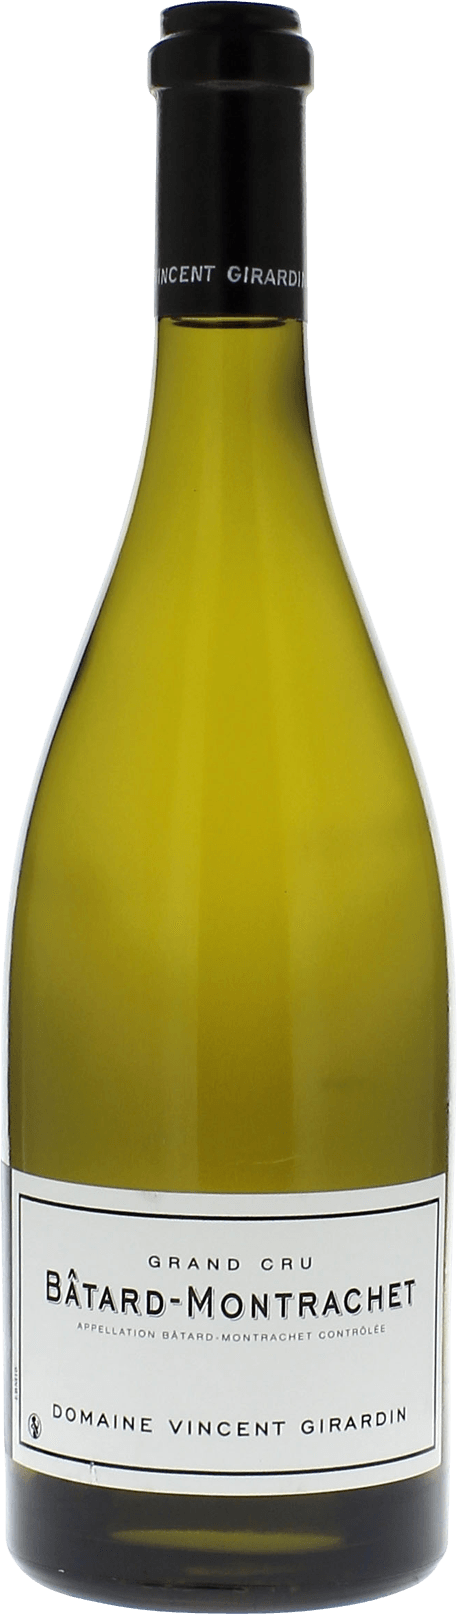 Bienvenues batard montrachet grand cru 2015 Domaine GIRARDIN Vincent, Bourgogne blanc